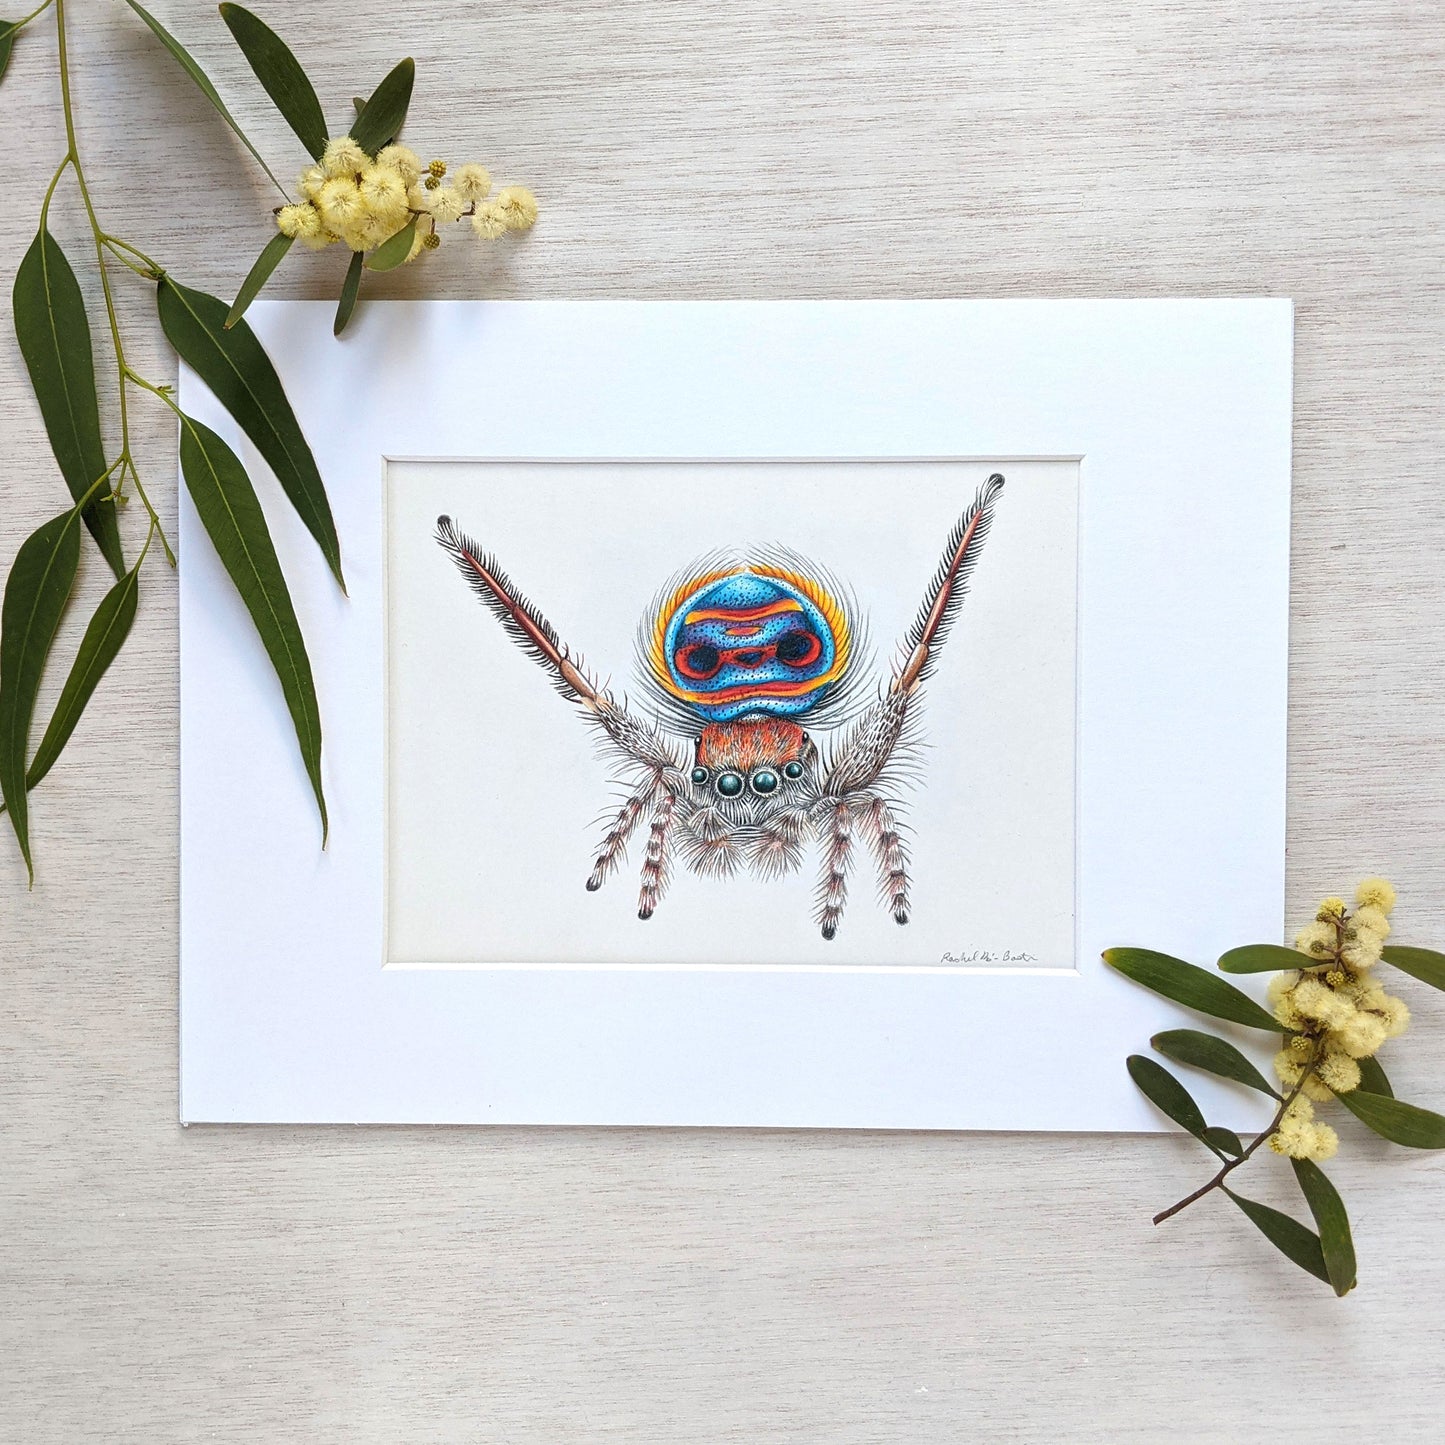 Original hand drawn pencil art of a coastal peacock spider by Rachel Diaz-Bastin. Original artwork available